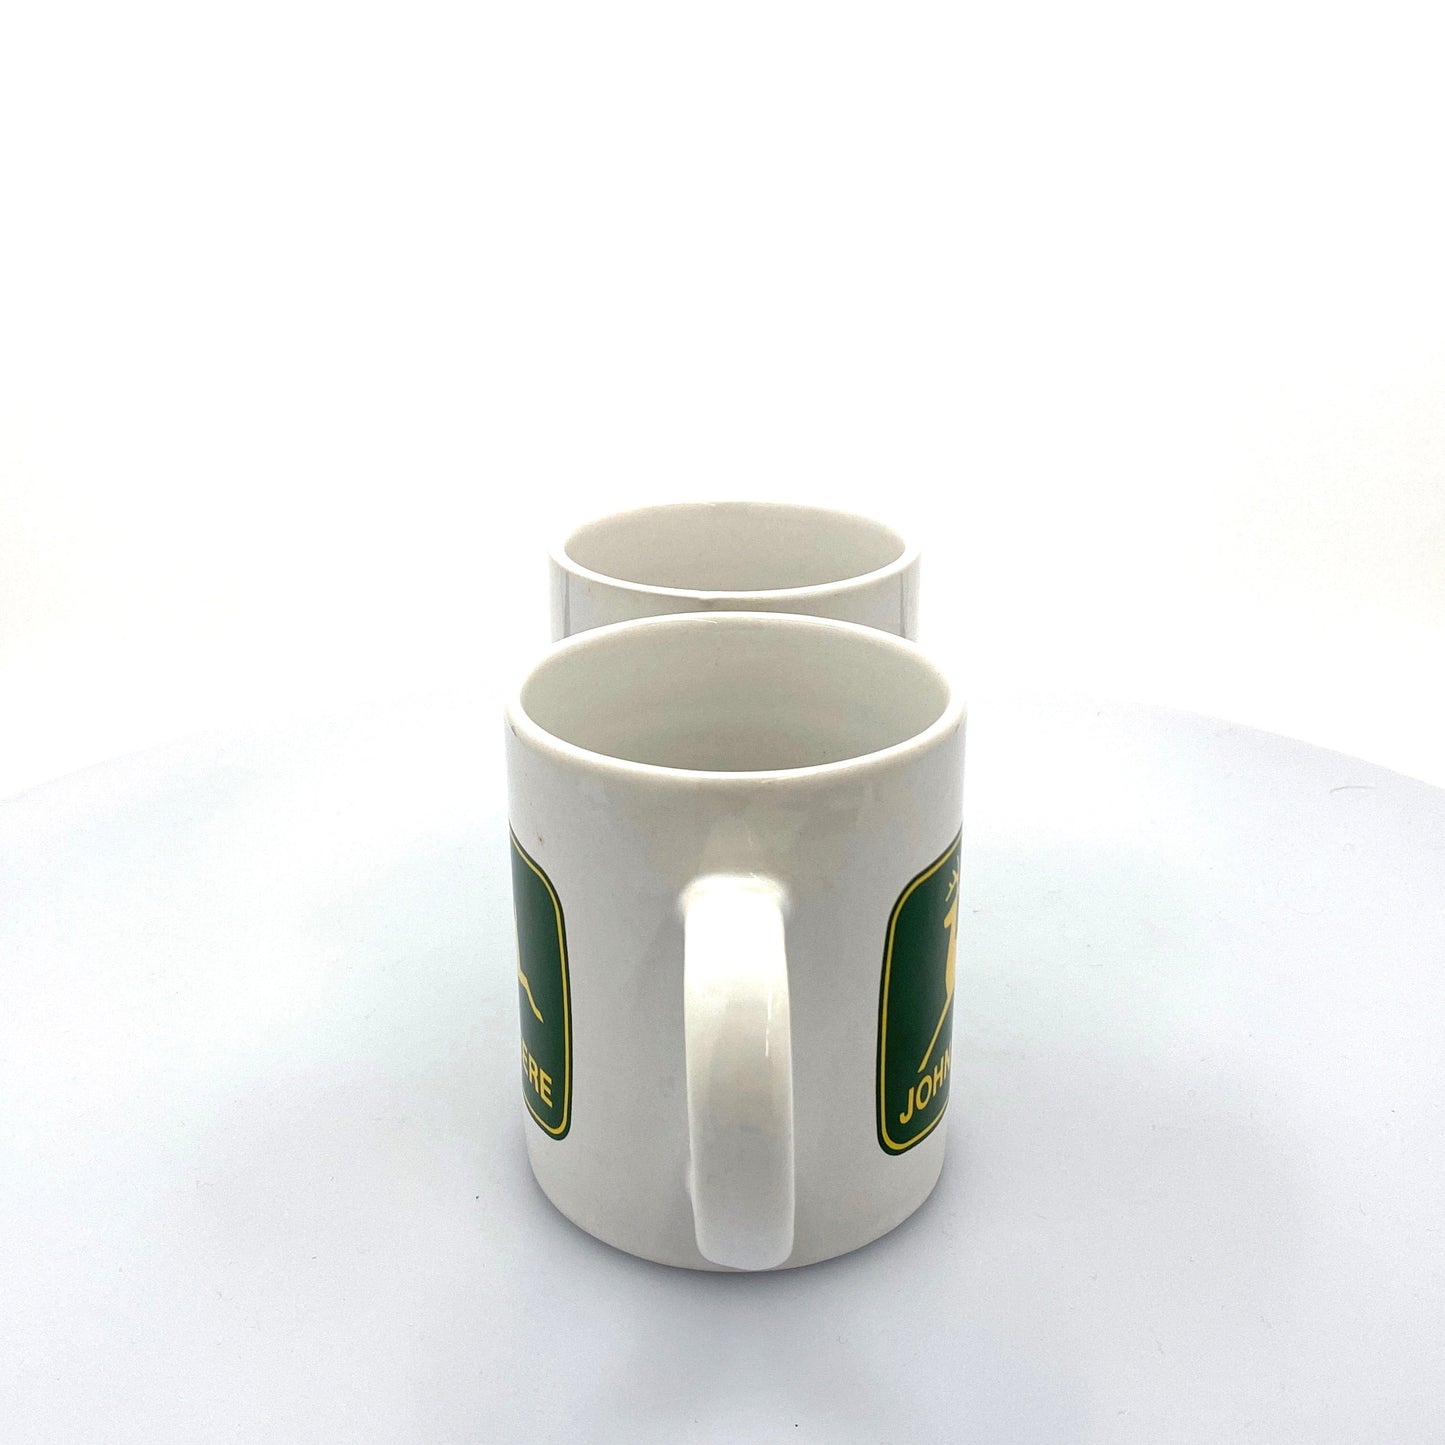 Set of 2, John Deere Coffee Cup Mug Logo Face 12 Oz